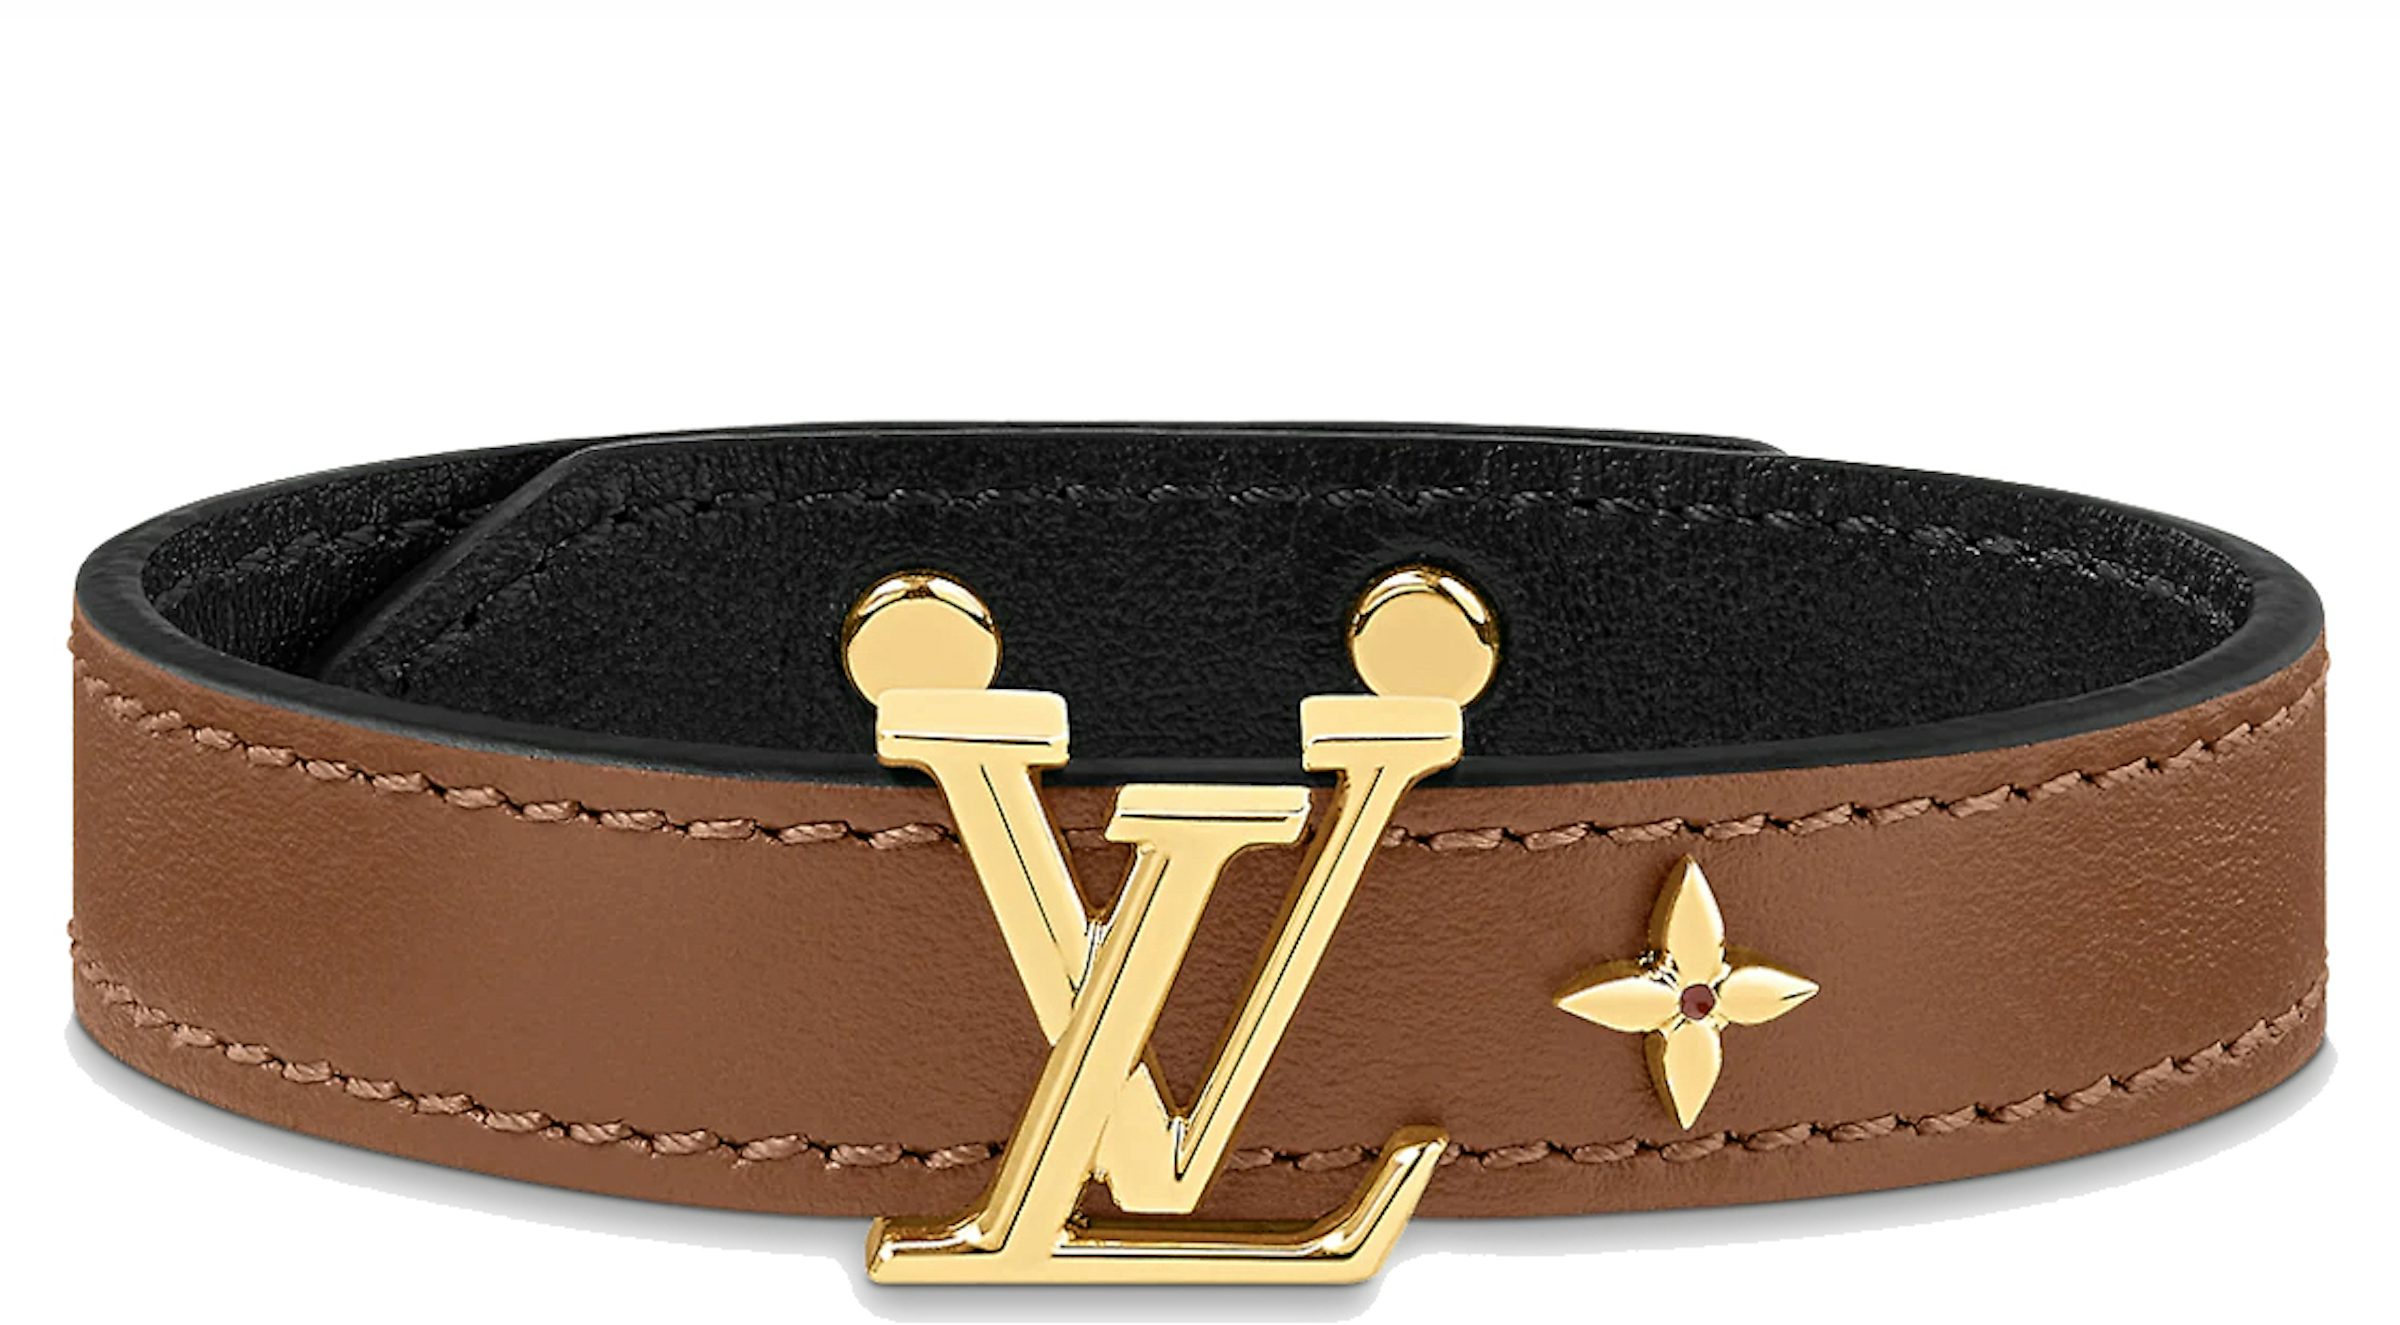 Louis Vuitton Womens Daily Confidential Bracelet Monogram / Red 17